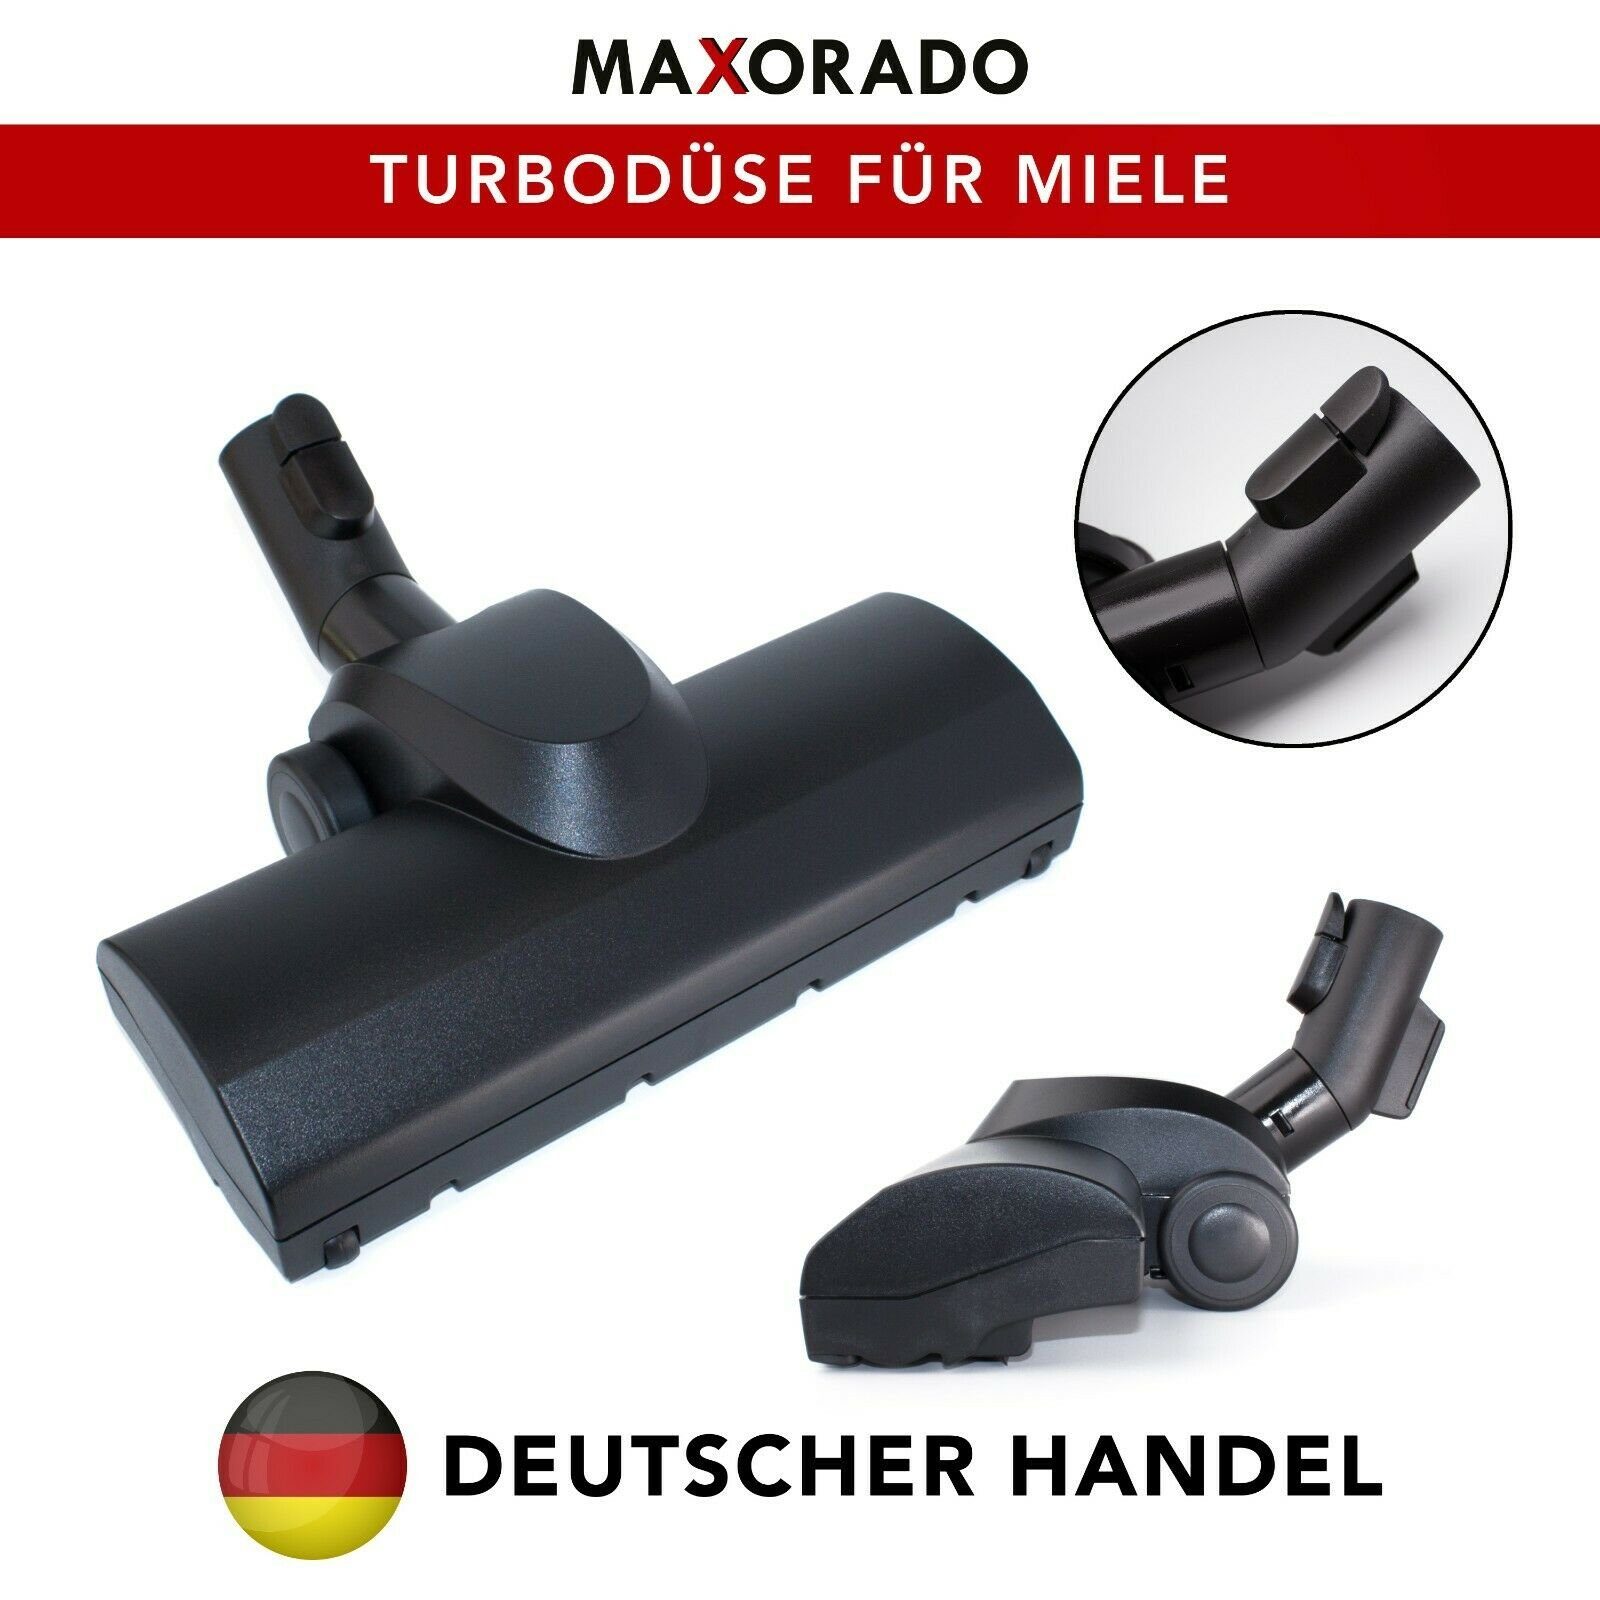 Maxorado Turbodüse Turbodüse für Miele Staubsauger S8 STB305-3 Düse Zubehör  Turbobürste